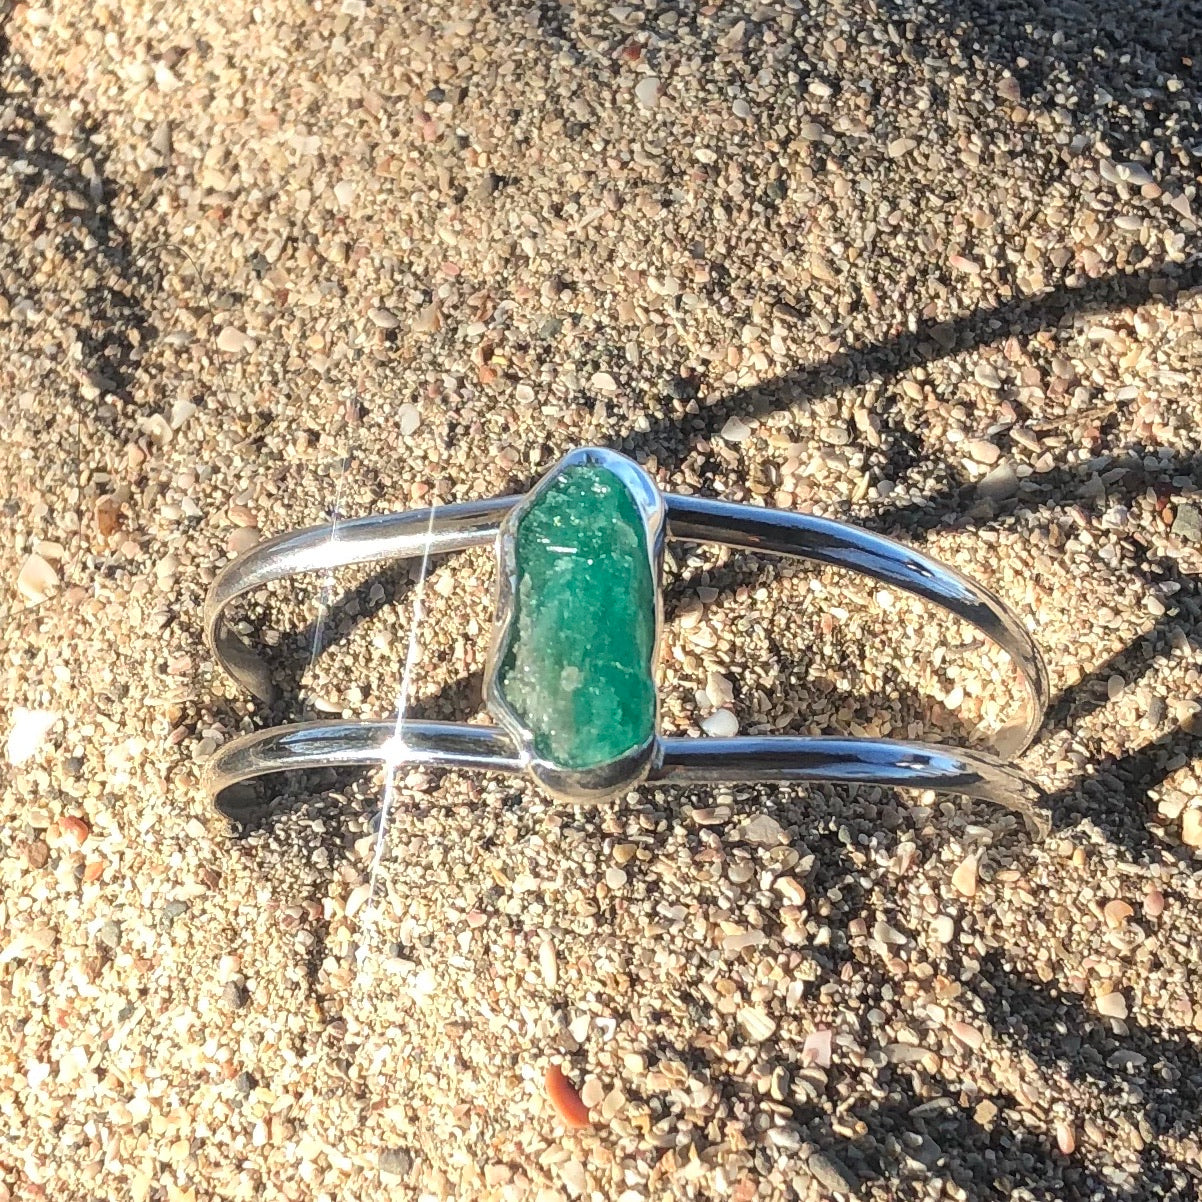 Emerald Dream Cuff-Jenstones Jewelry